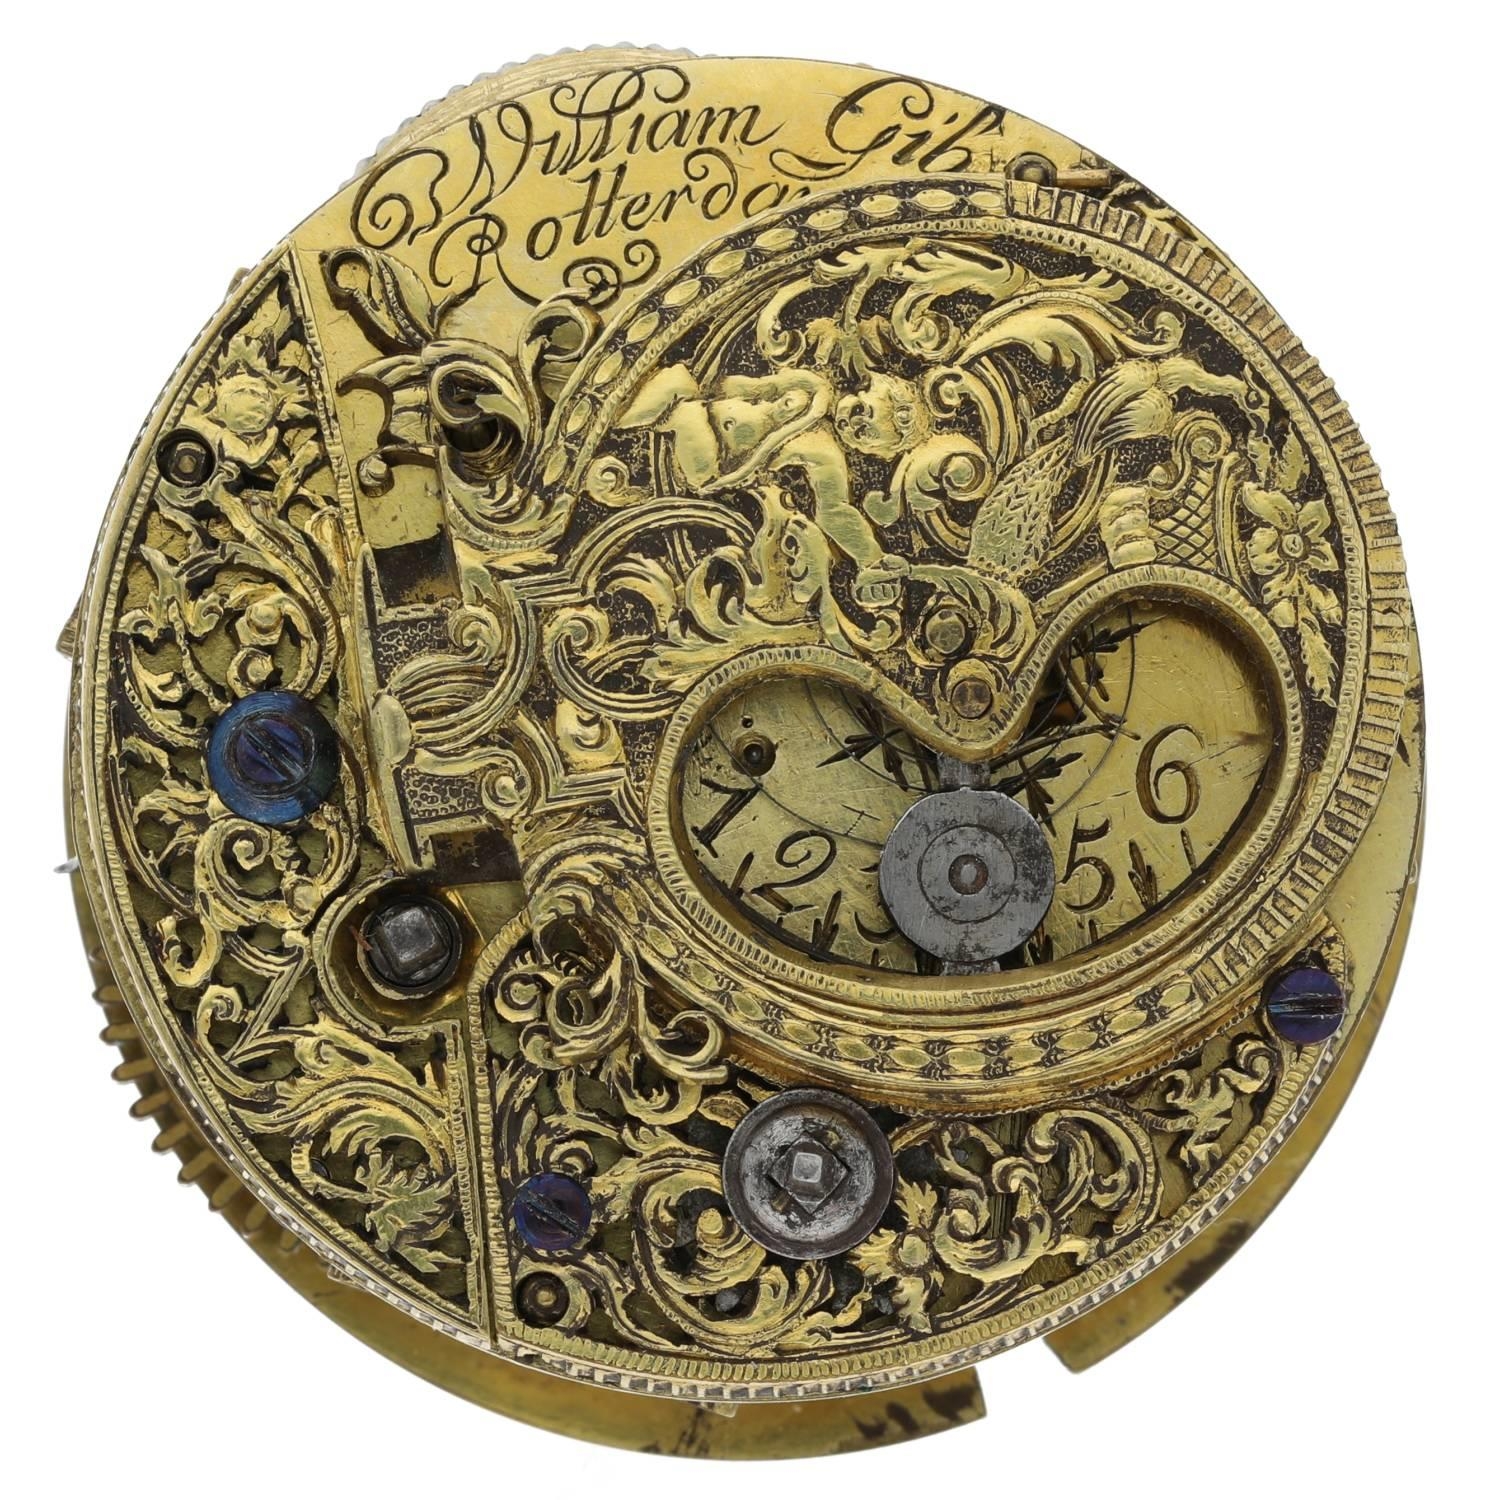 William Gib, Rotterdam - Dutch 18th century 'mock pendulum' verge pocket watch movement, signed